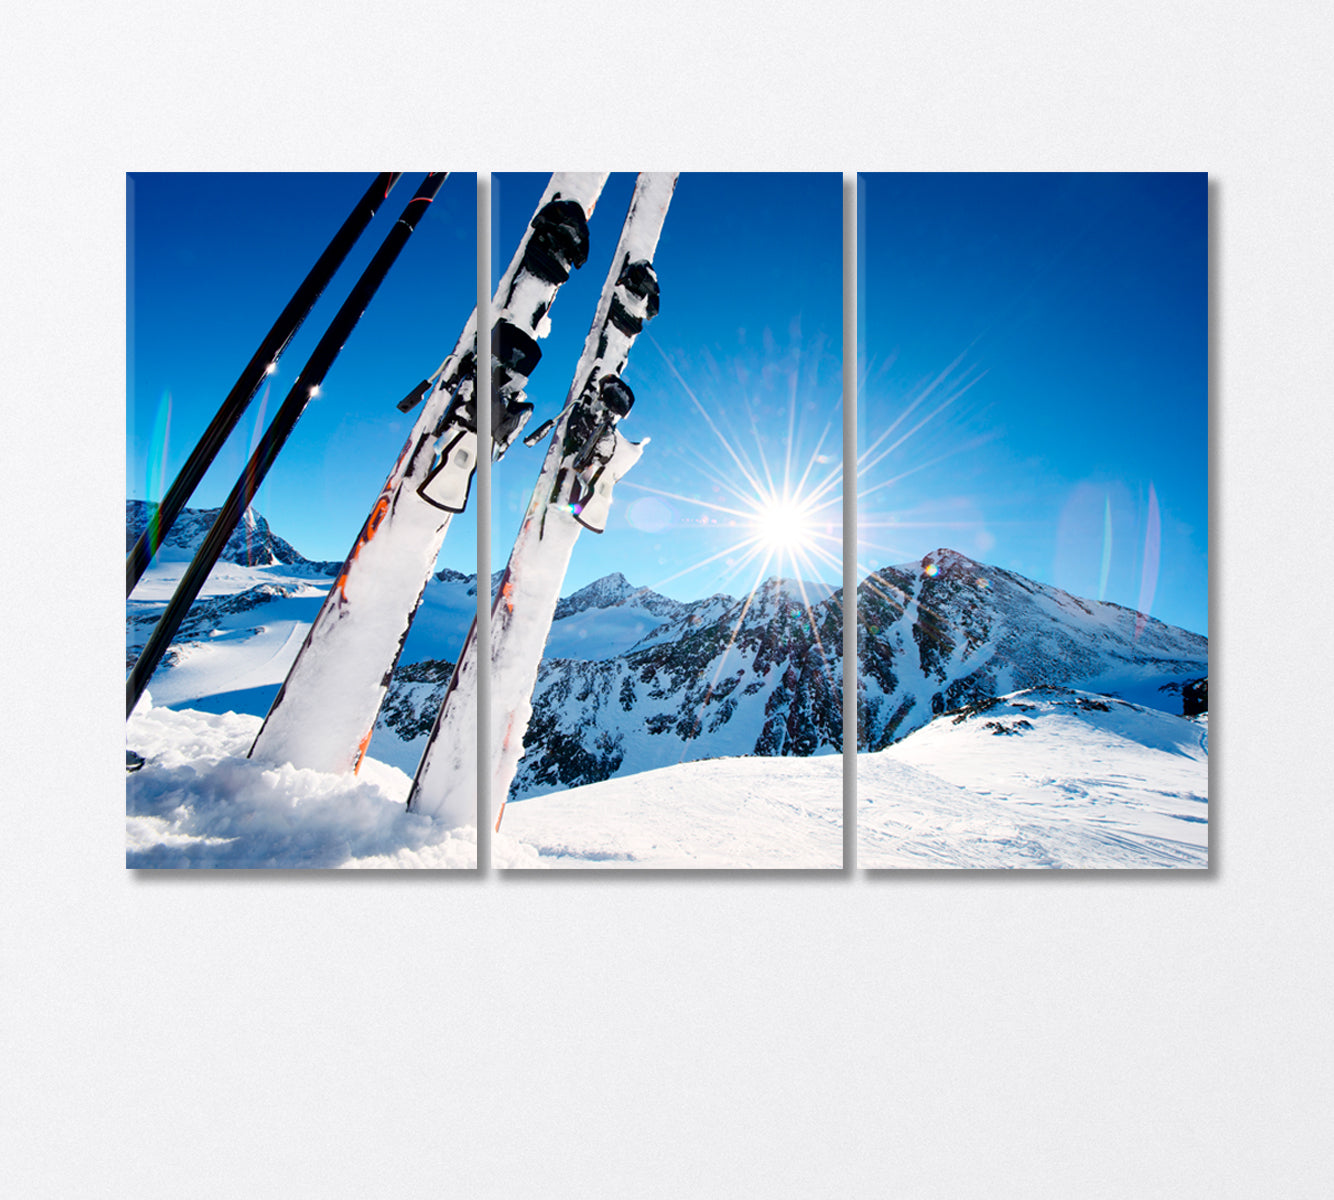 Ski Equipment in Mountains in Snow Canvas Print-Canvas Print-CetArt-3 Panels-36x24 inches-CetArt